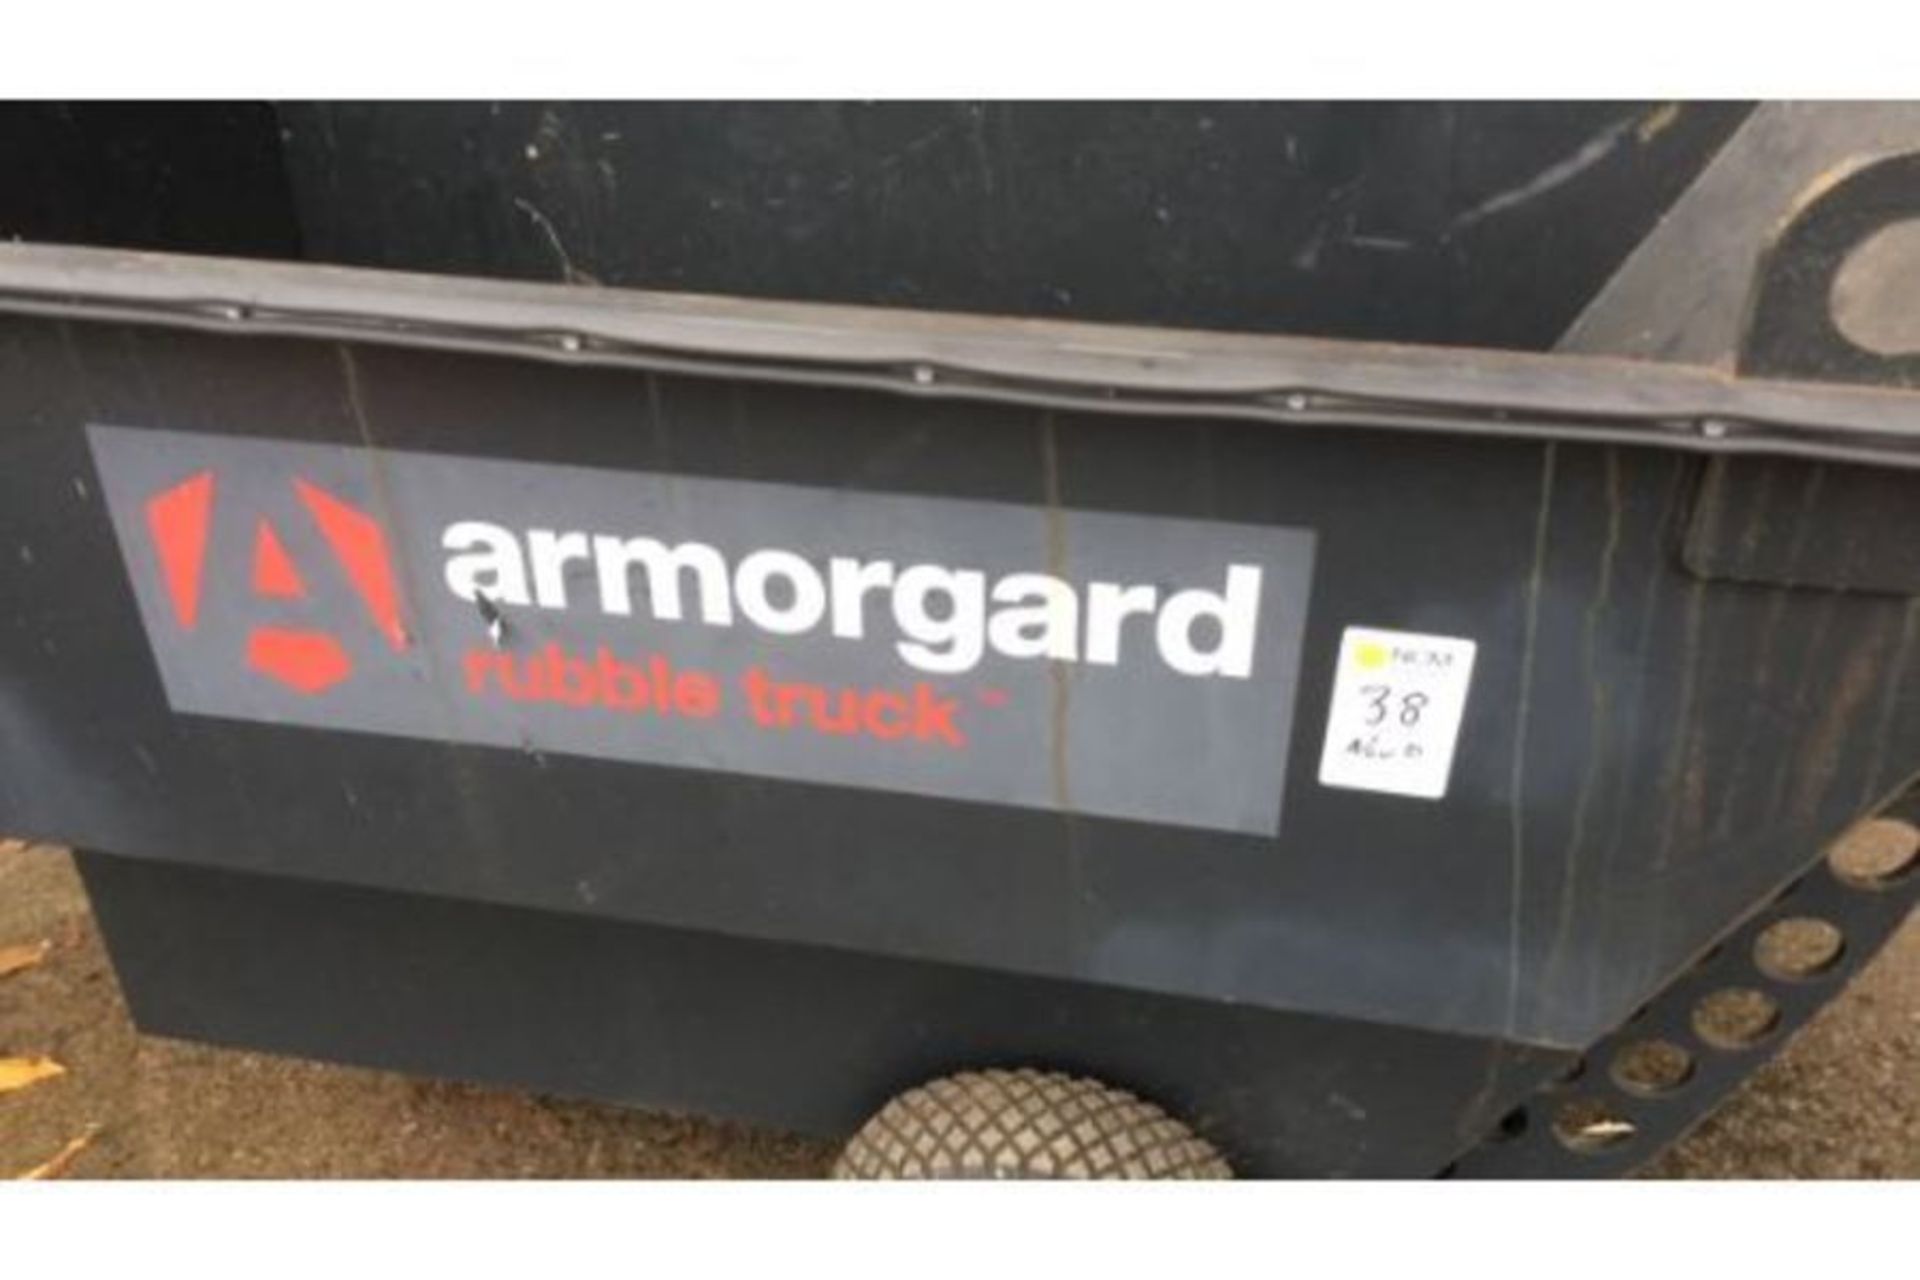 Armorgard rubble truck (999) - Image 2 of 5